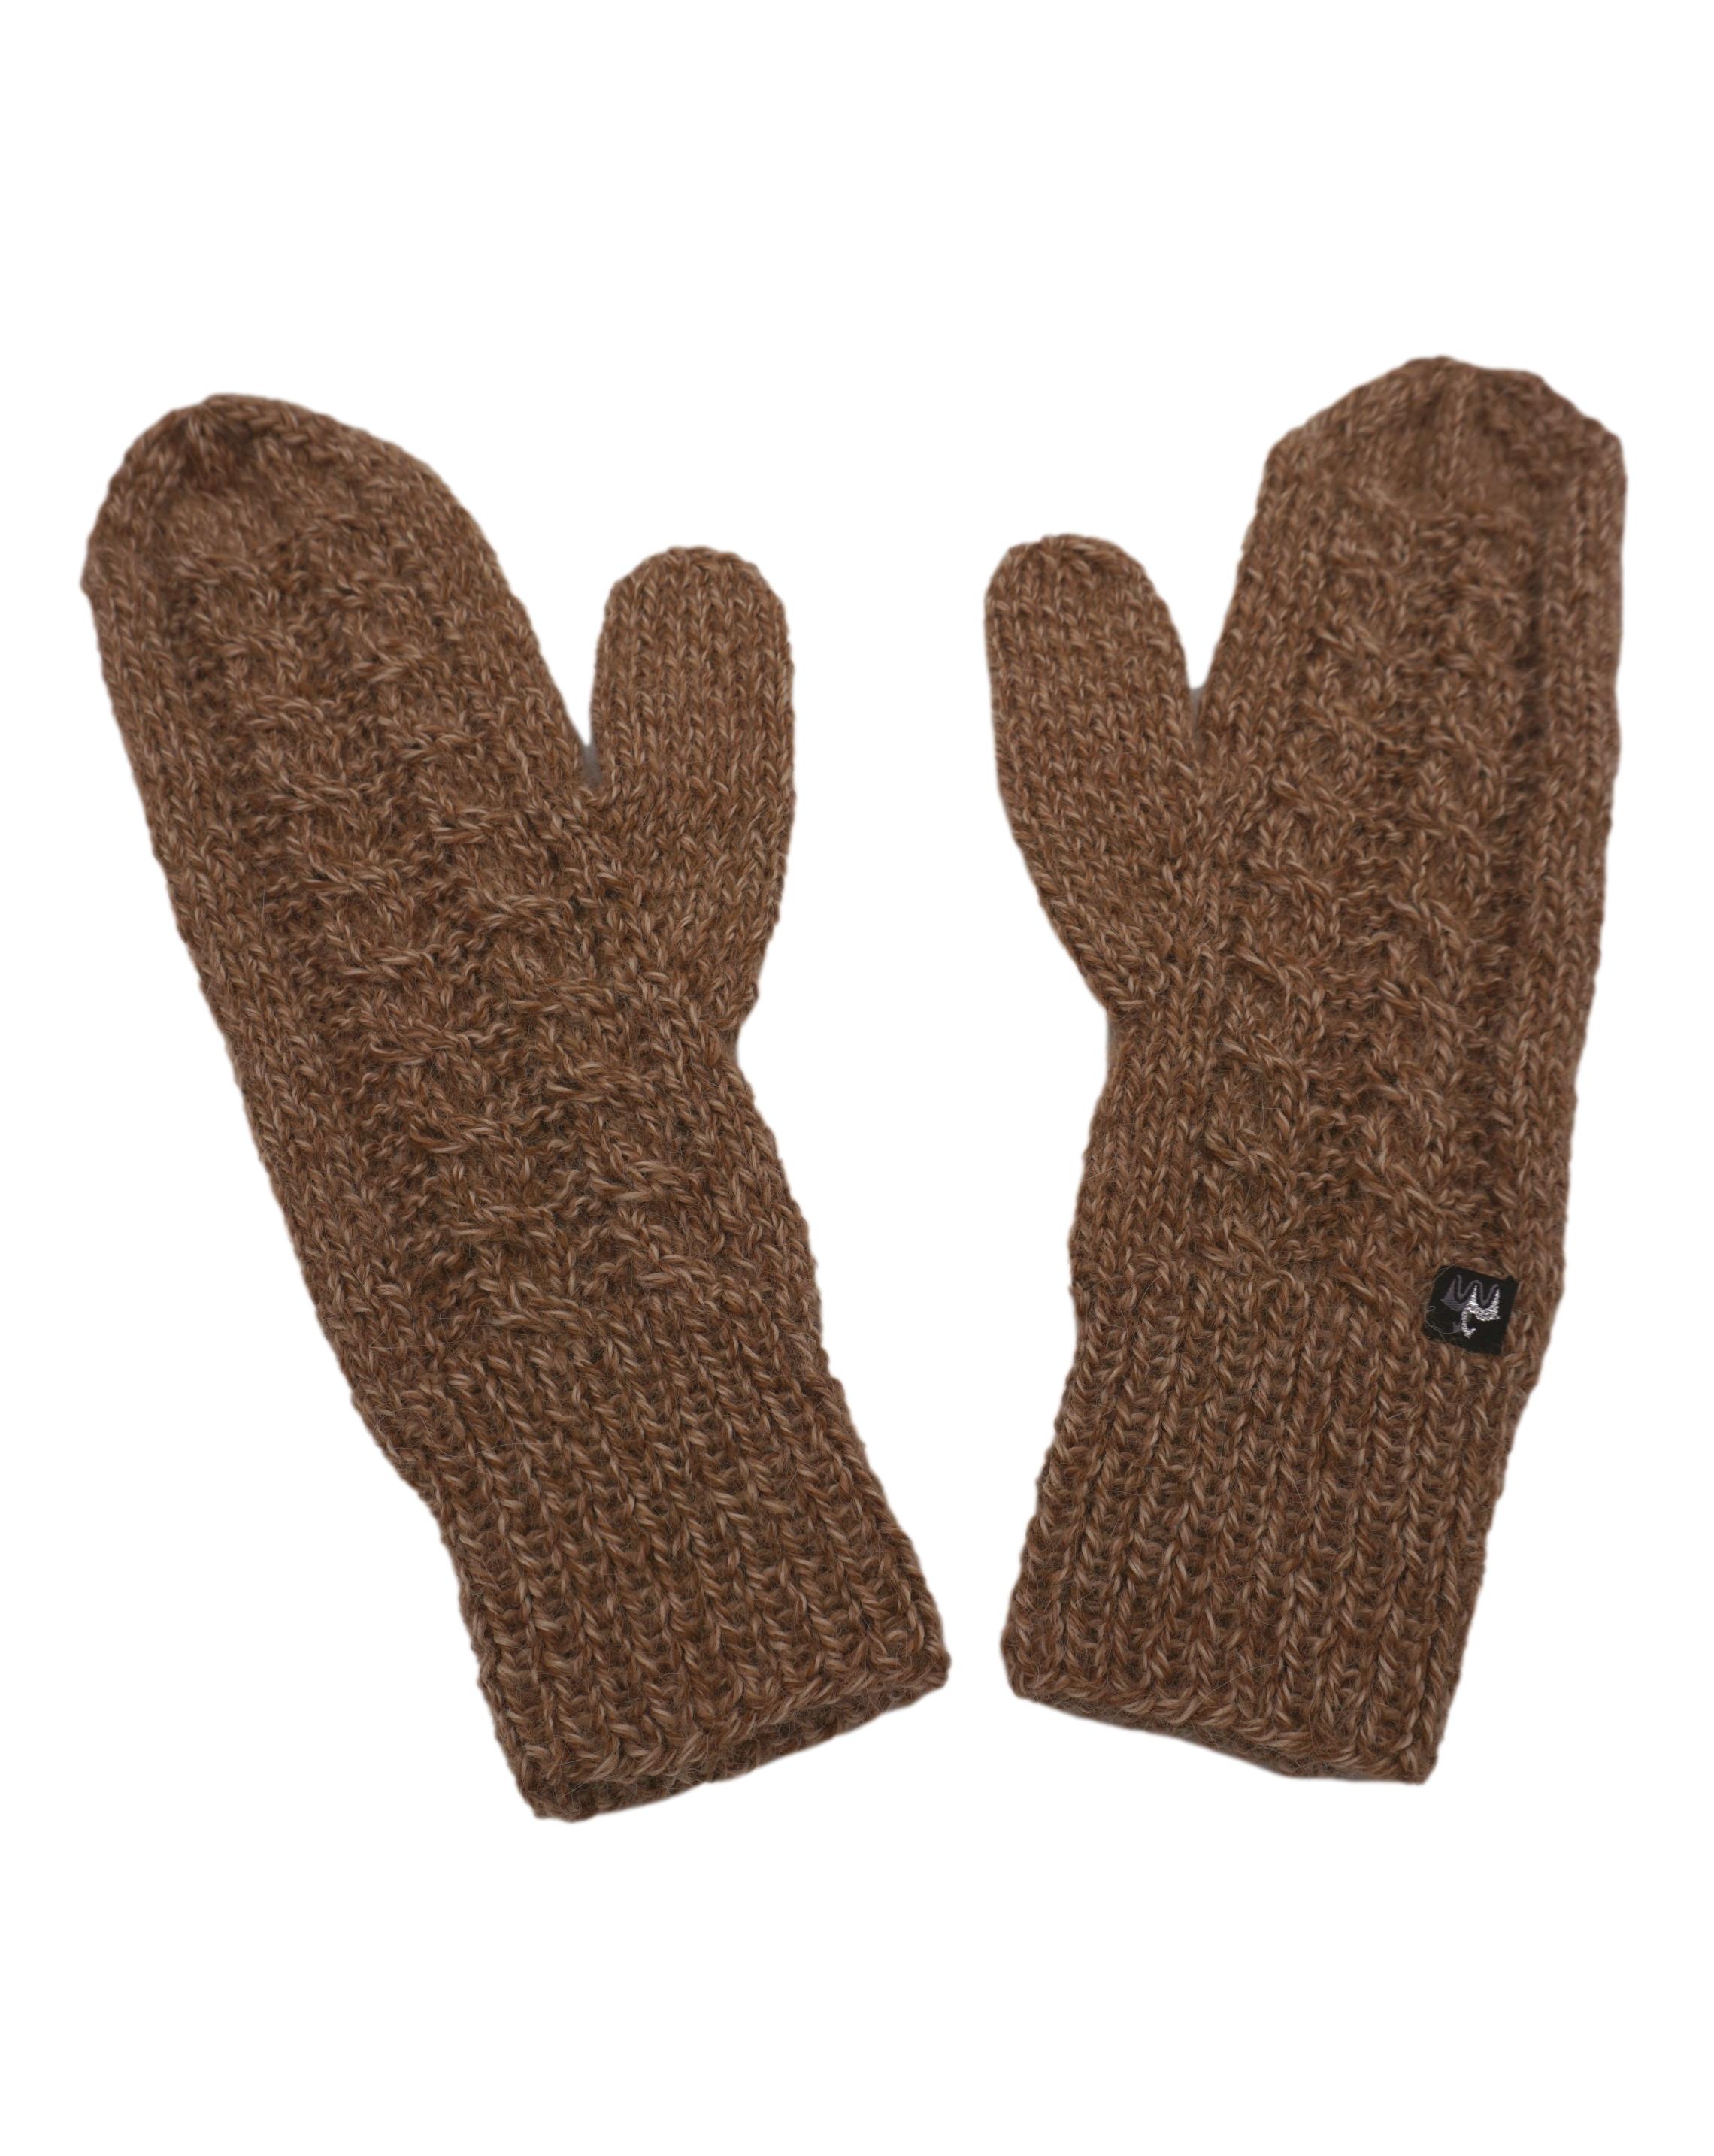 Hochwertige, Handschuhe, Fausthandschuhe aus Baby-Alpaka-Wolle Farbe: Braun u. Beige-Braun | Handmade by Millwa